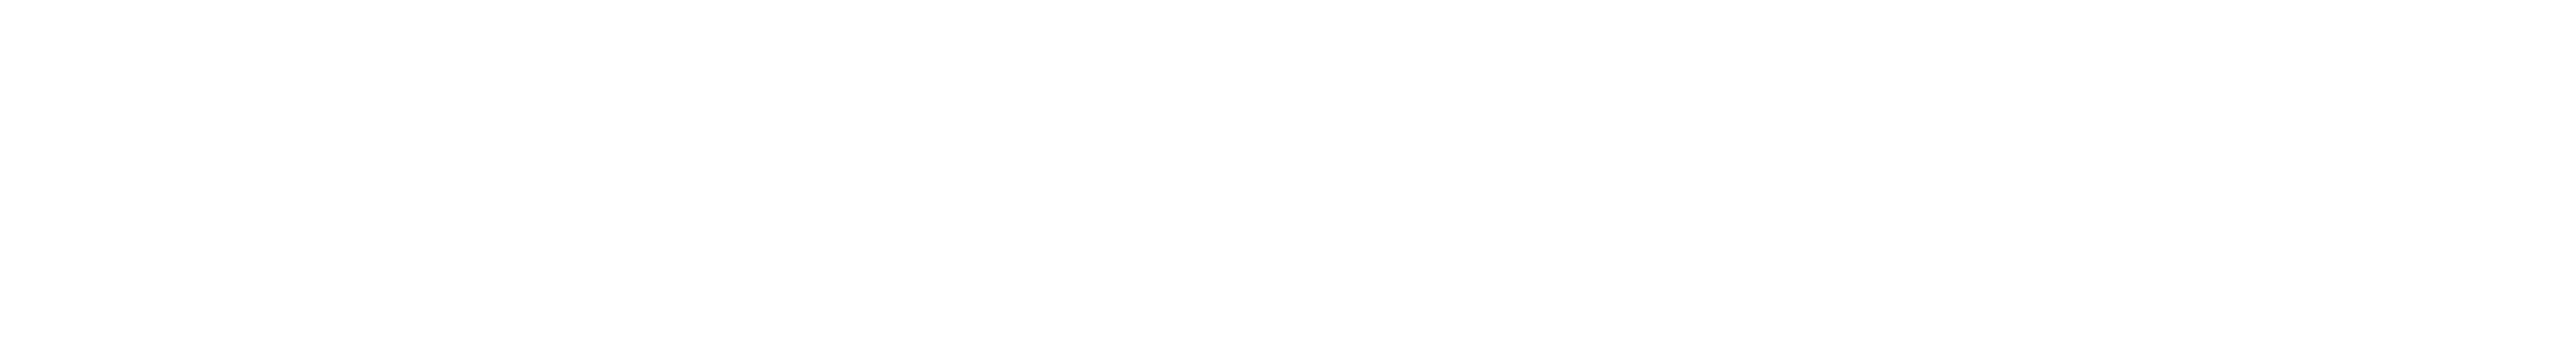 Soul of a Nation Presents: Sound of Freedom – A Juneteenth Celebration logo